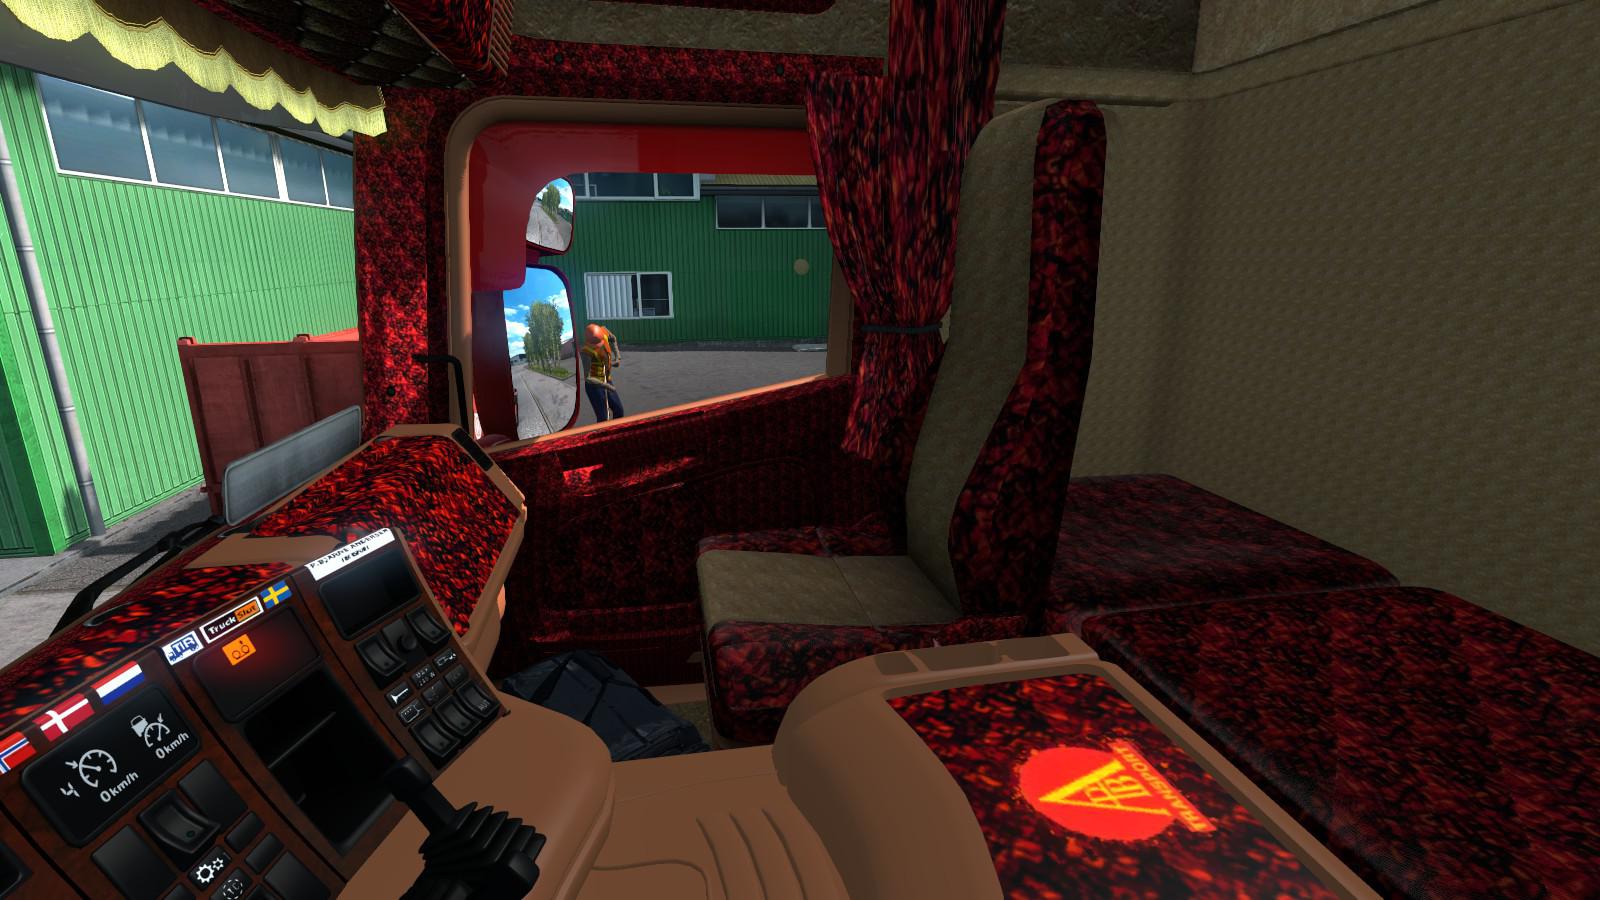 euro truck simulator 2 bus mods free